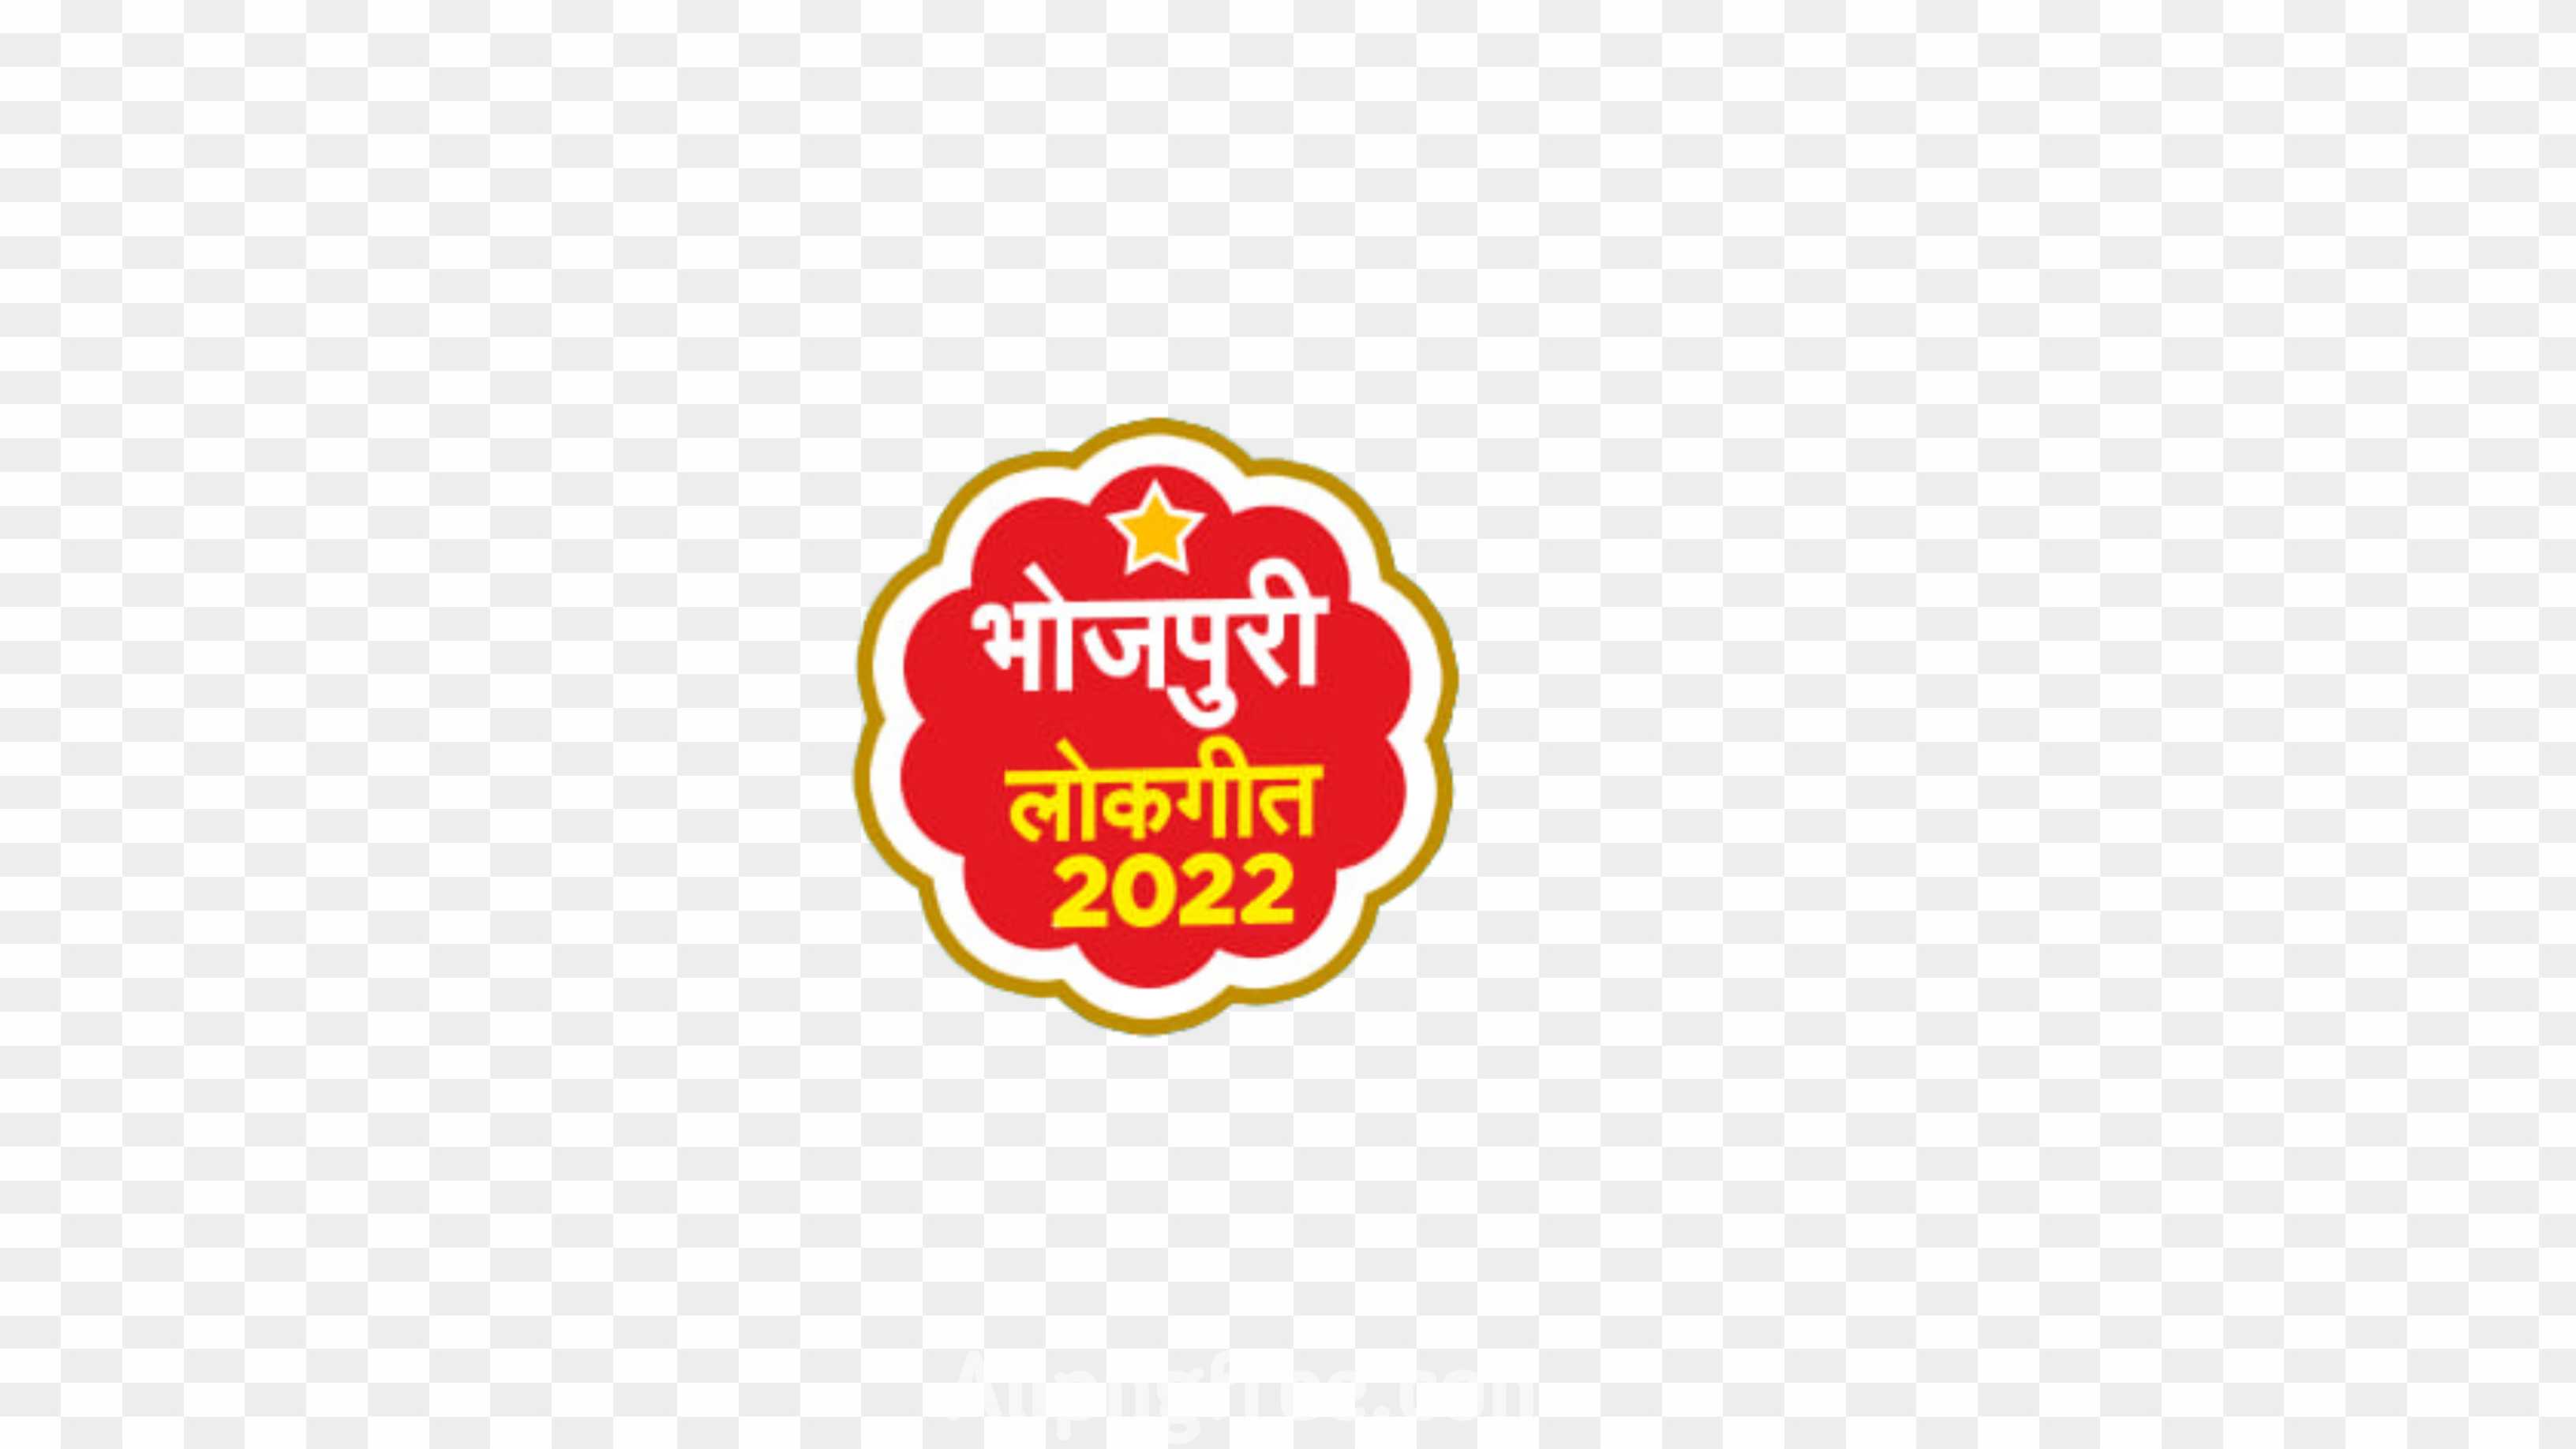 Bhojpuri lokgeet  2022 sticker PNG